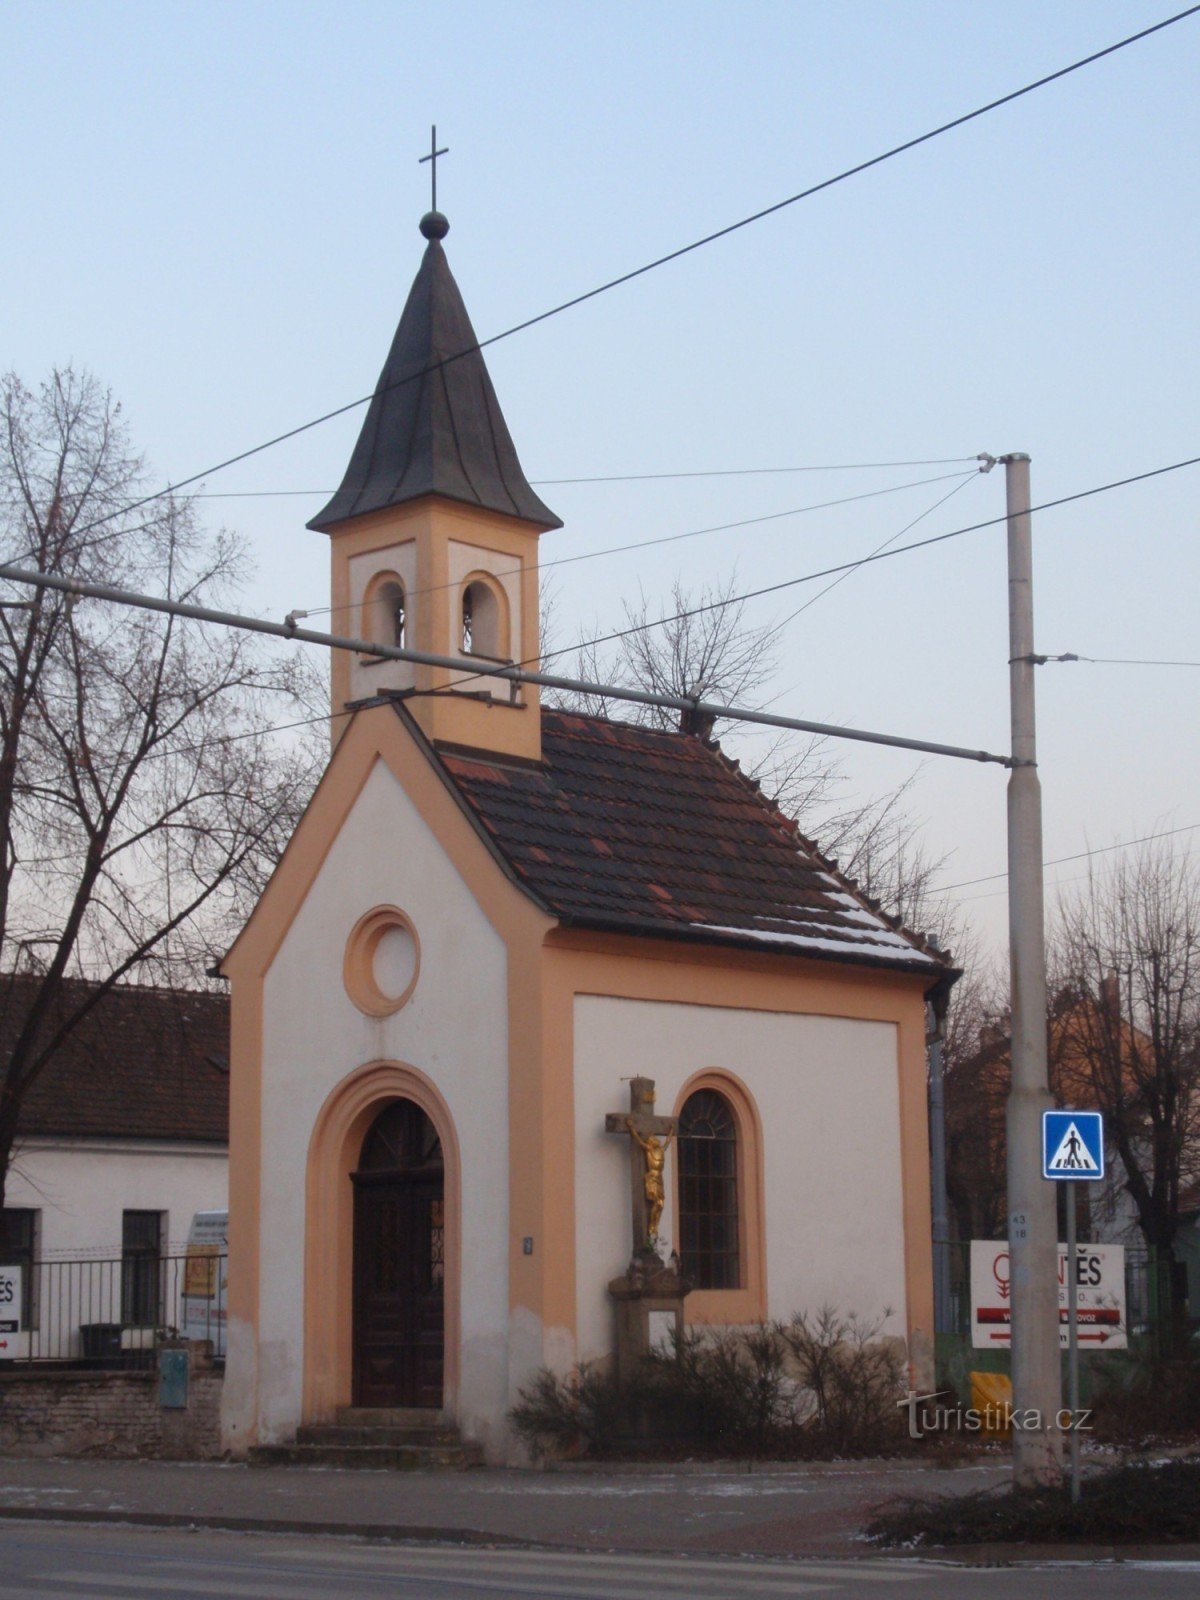 Kapel af St. Františka i Brno-Židenice